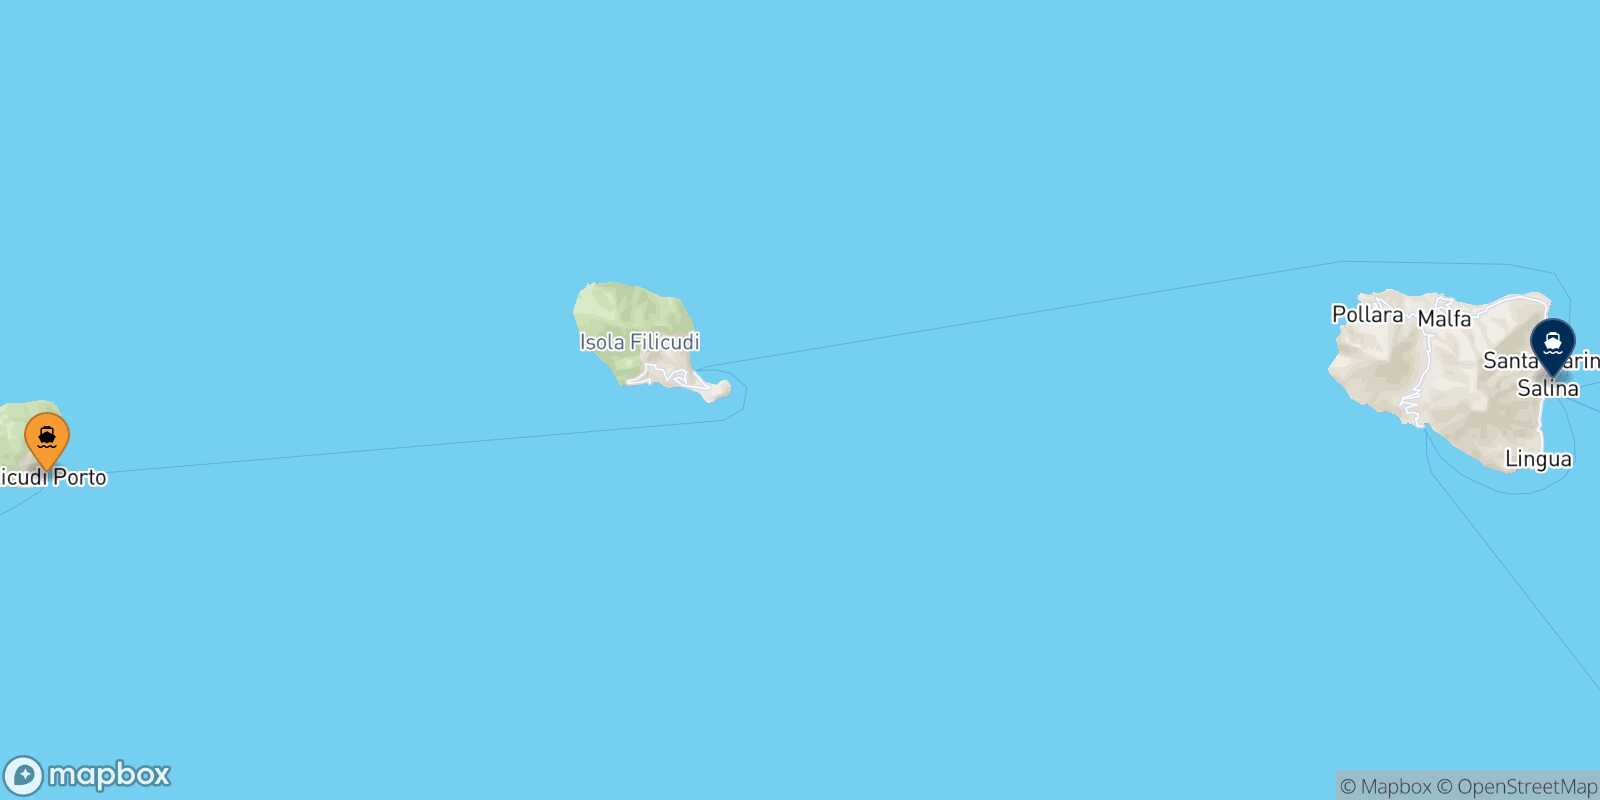 Mapa de la ruta Alicudi Santa Marina (Salina)